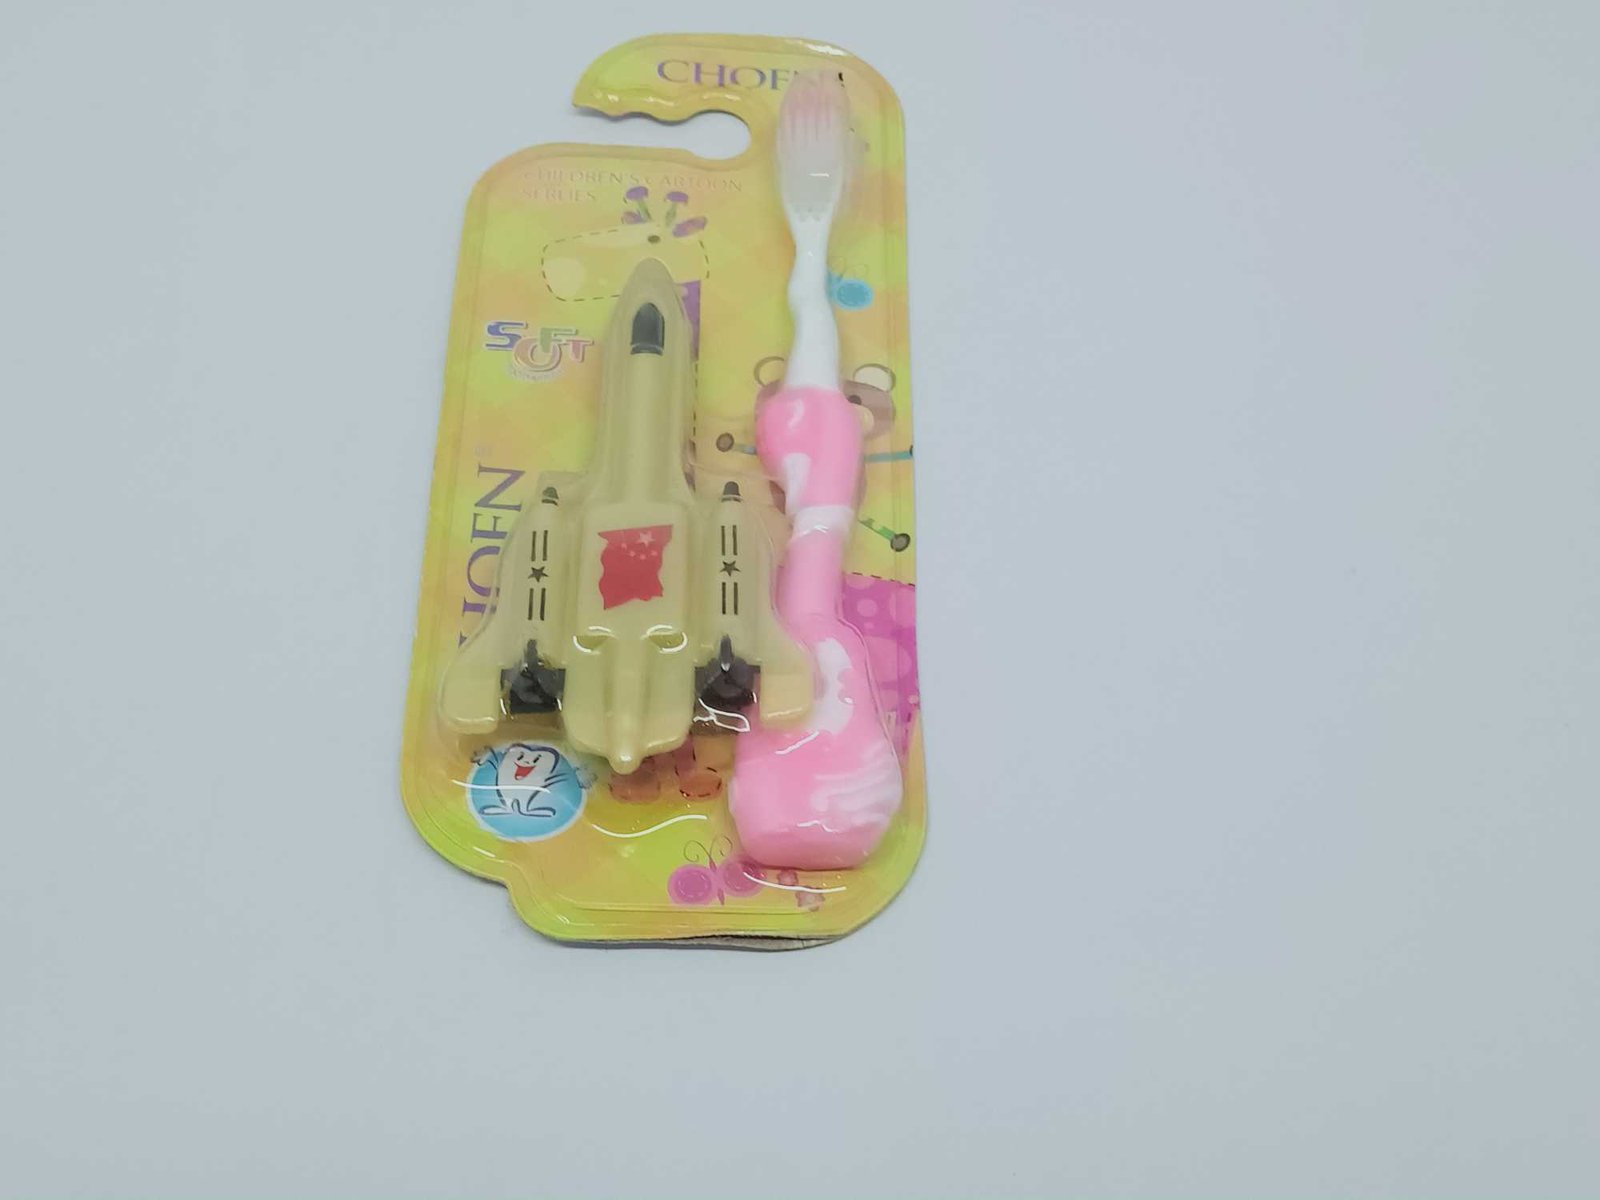 Chofn Soft Toothbrush with Children's Cartoon Serlies, 1N